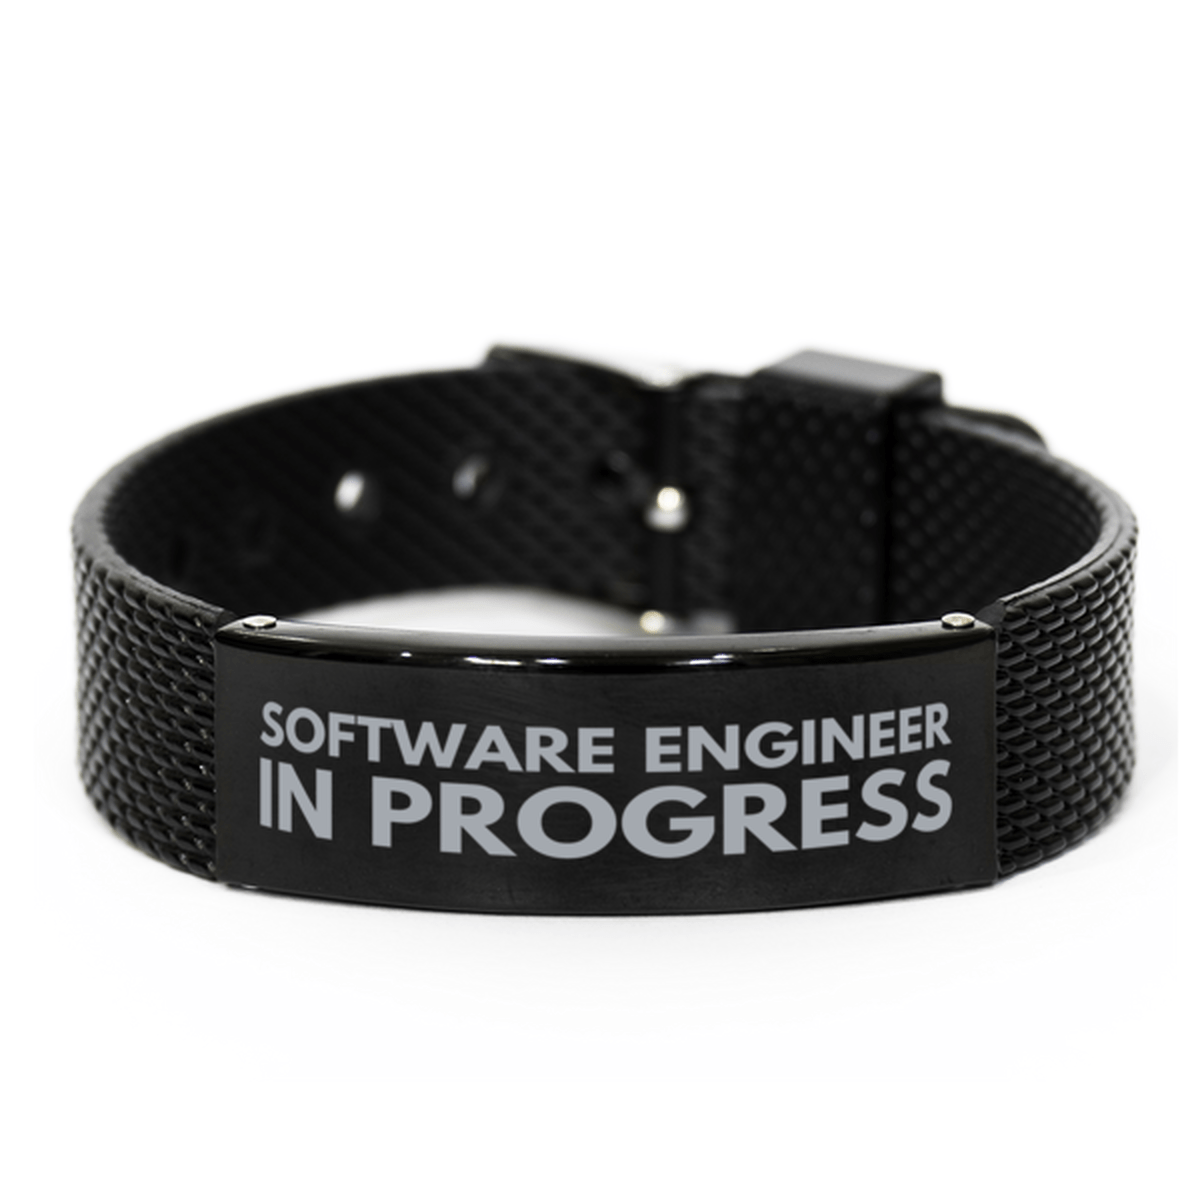 Inspirational Software Engineer Black Shark Mesh Bracelet, Software Engineer In Progress, Best Graduation Gifts for Students